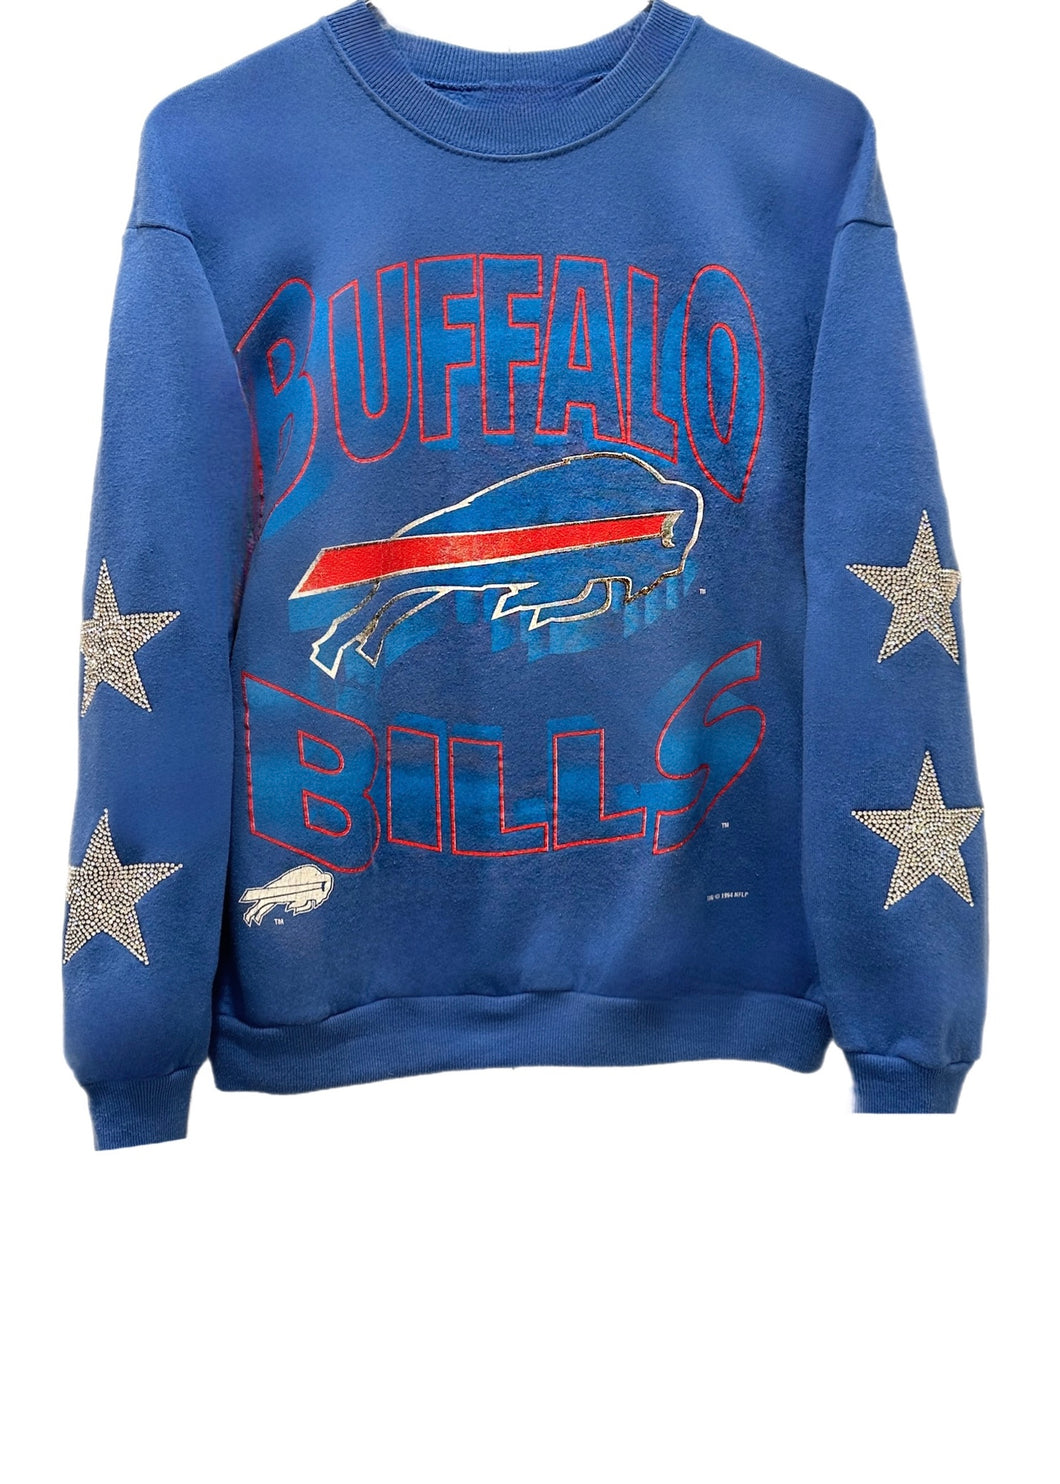 Buffalo Bills, NFL One of a KIND Vintage Sweatshirt with Crystal Star Design